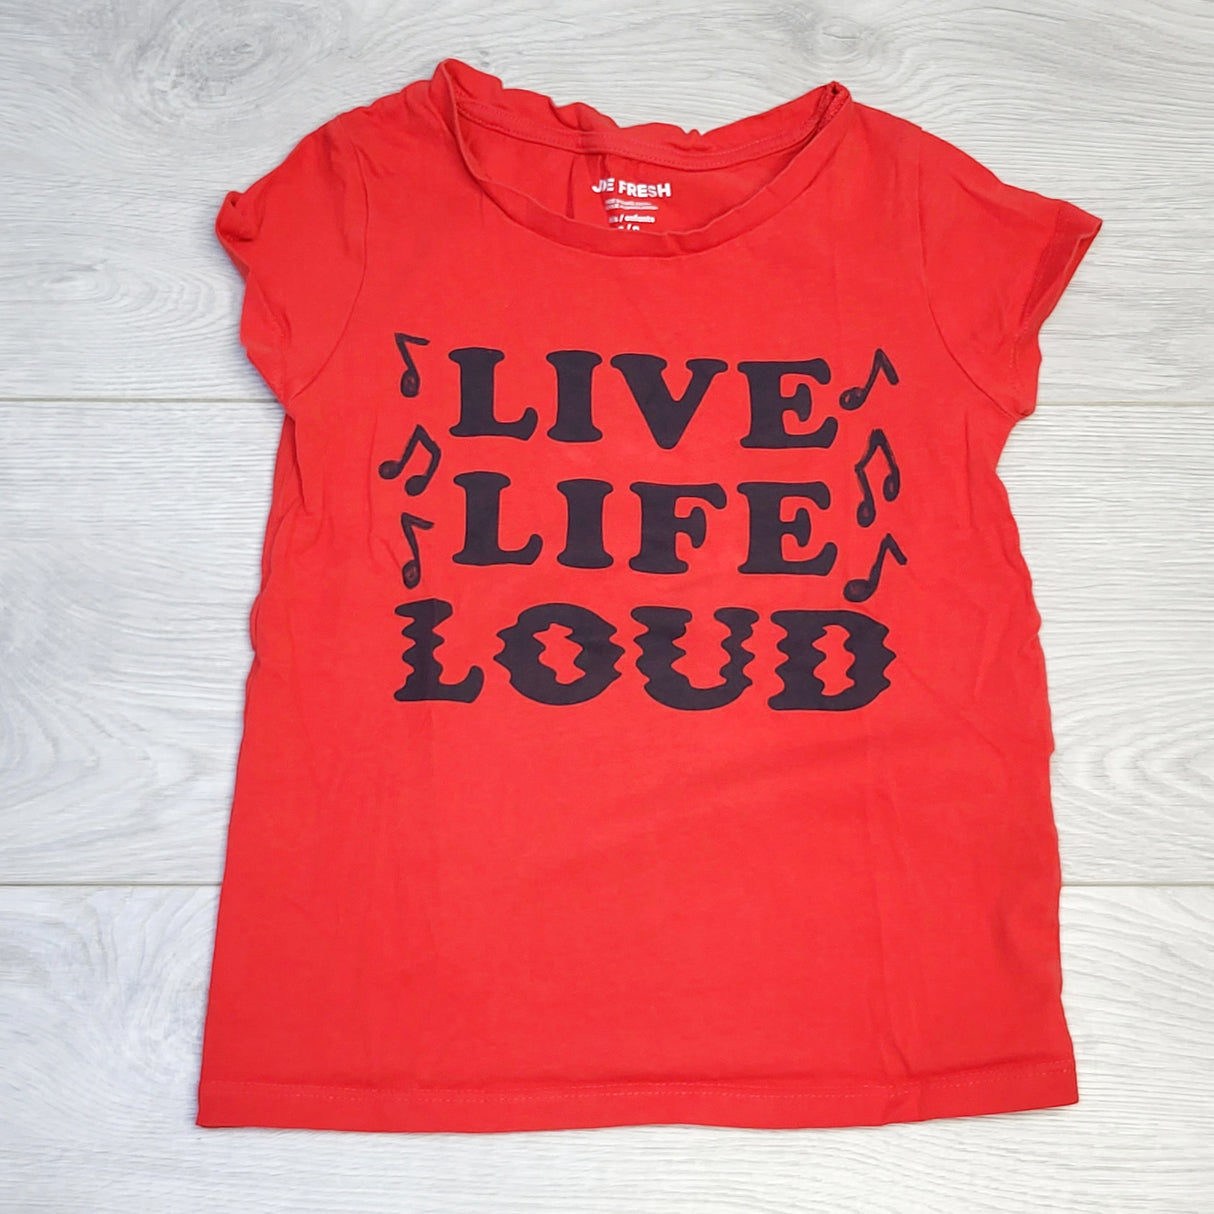 ANHA1 - Joe red "Live Life Loud" t-shirt, size 6